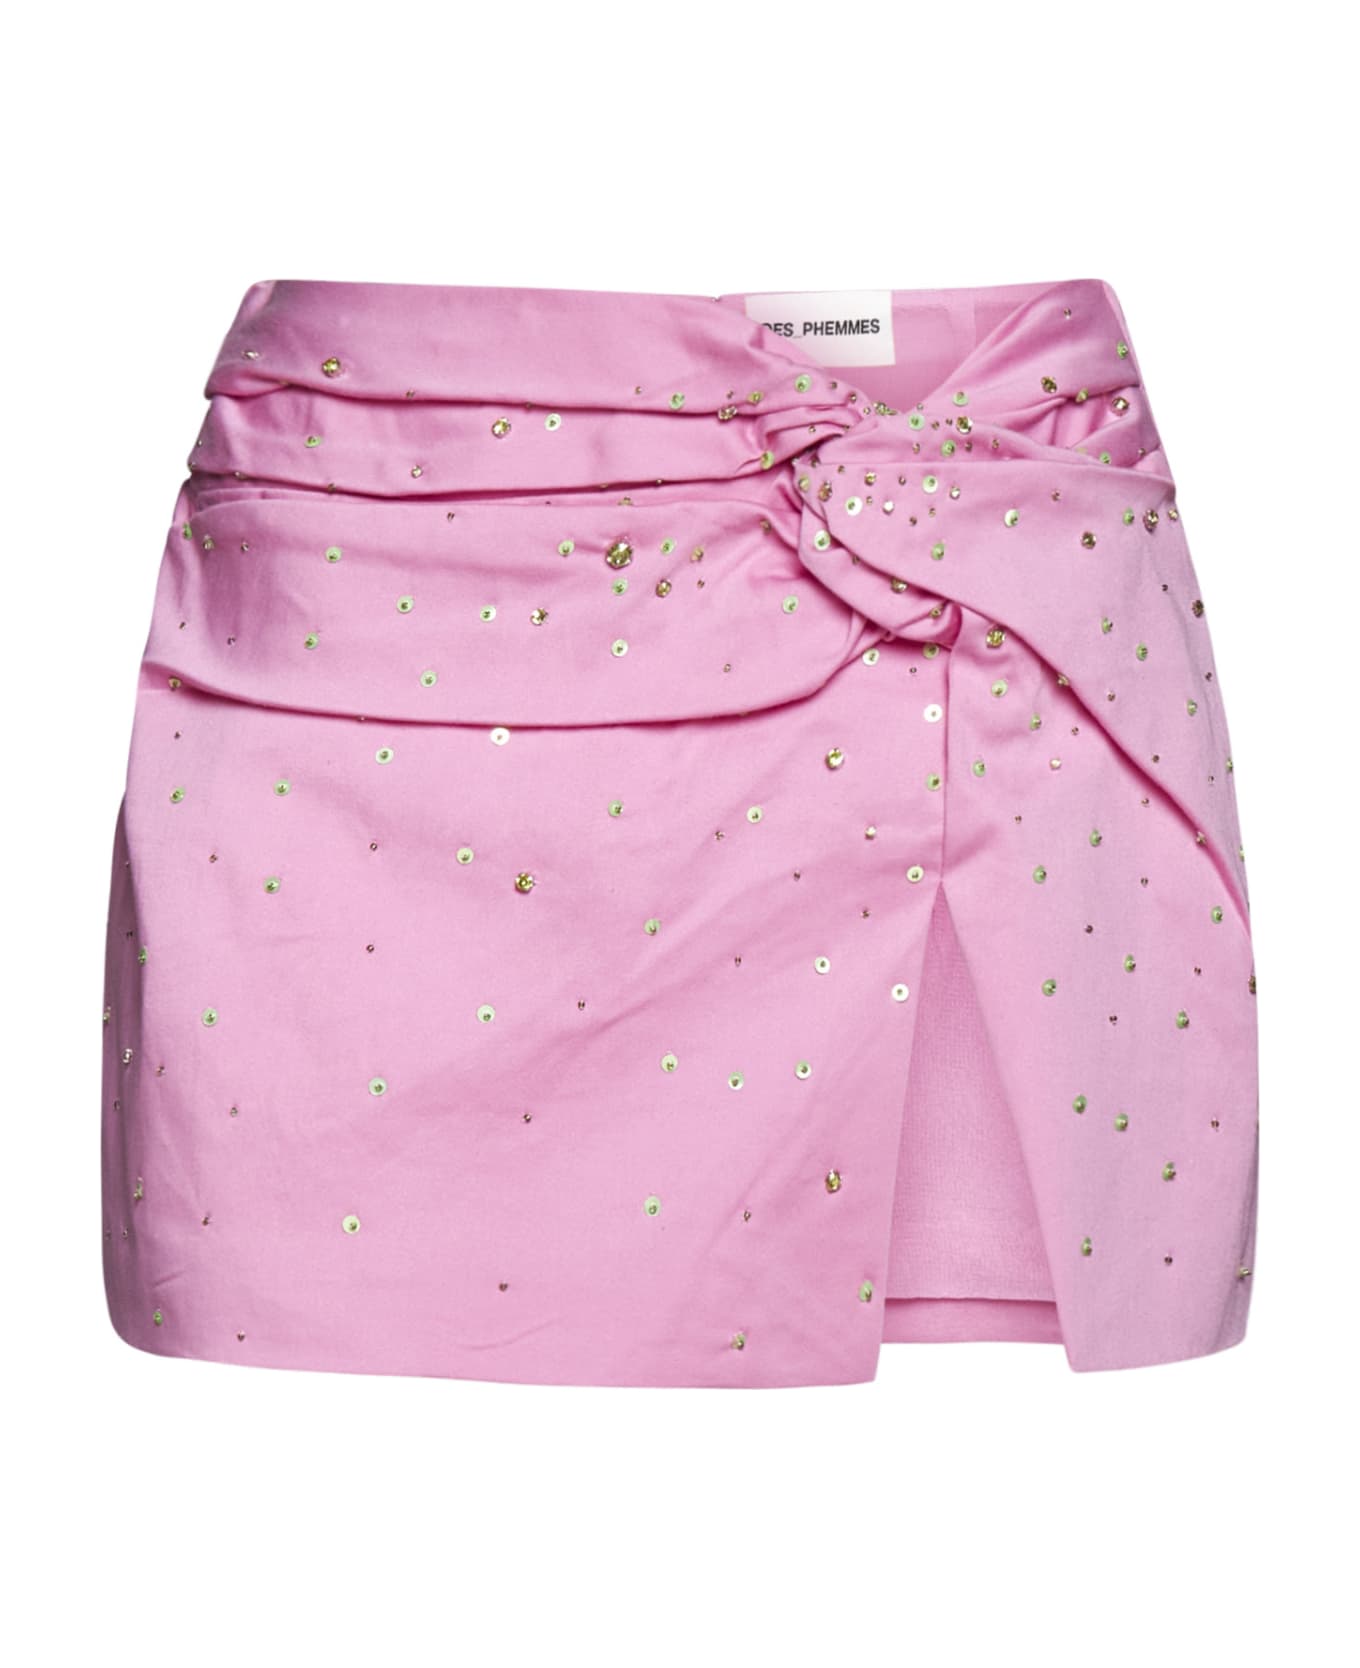 Des Phemmes Skirt - Baby pink